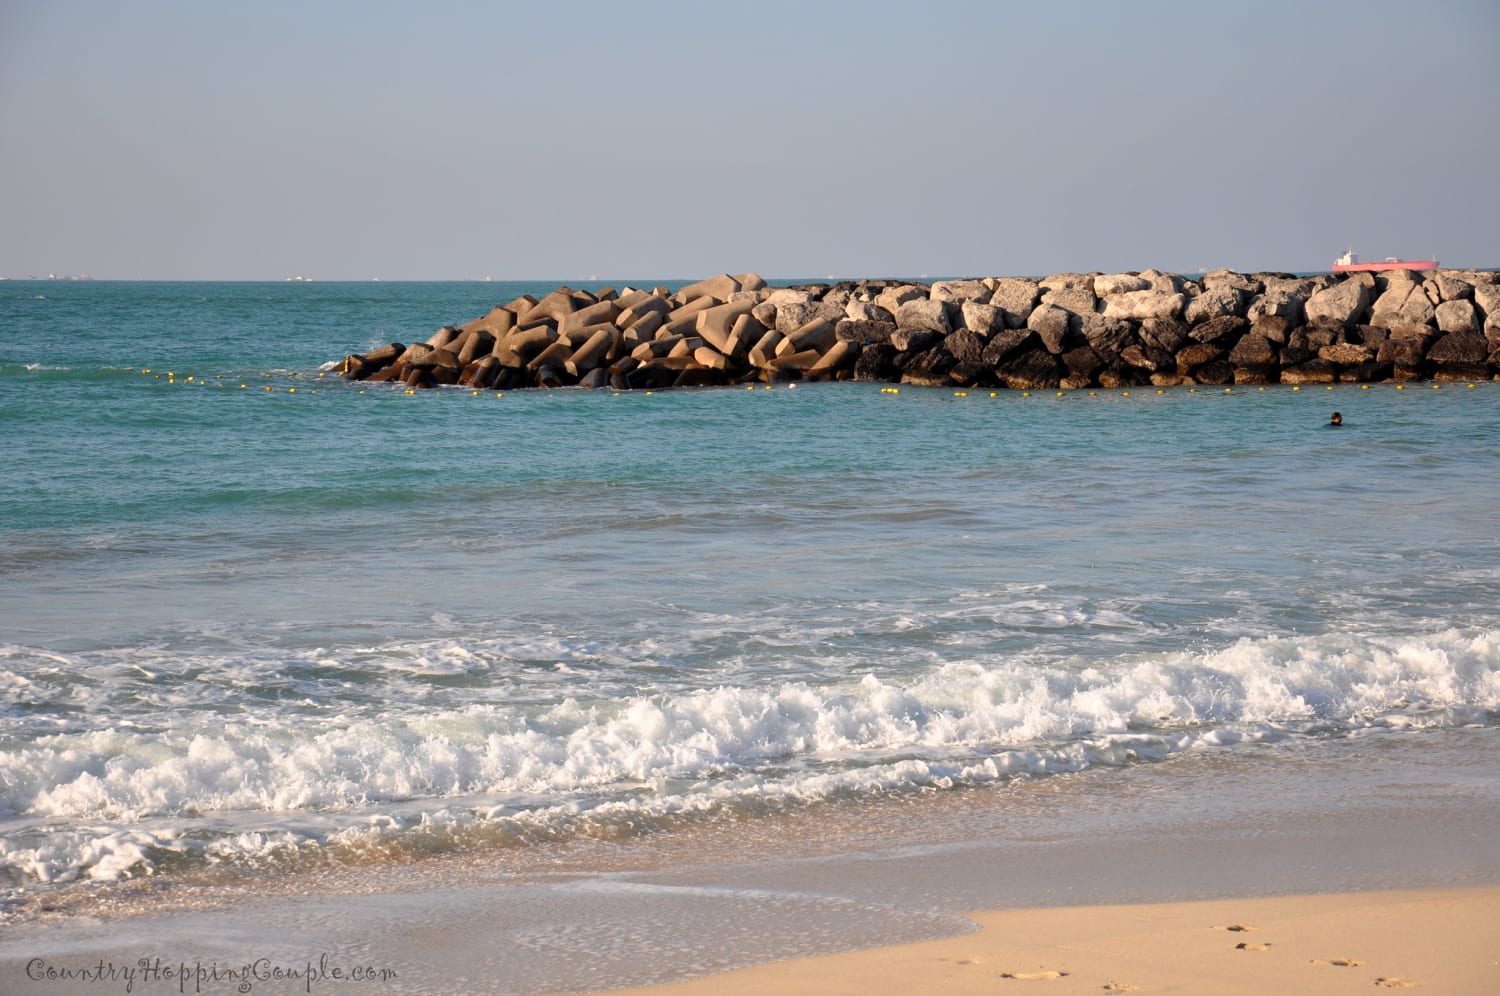 Al Mamzar Beach Park, an offbeat attraction in Dubai